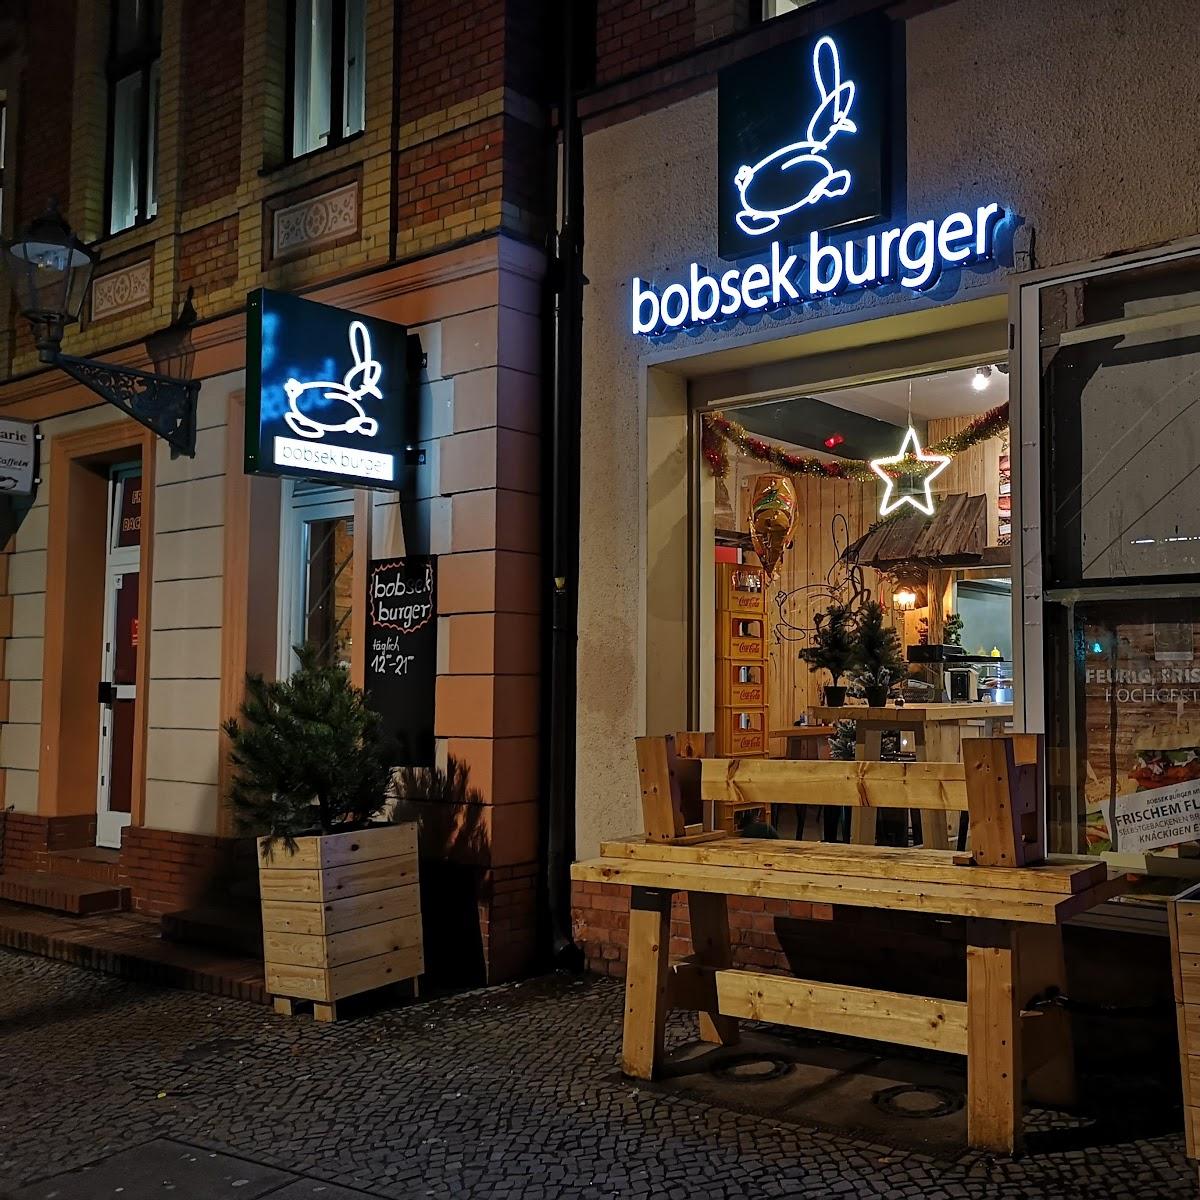 Restaurant "Bobsek Burger" in Berlin